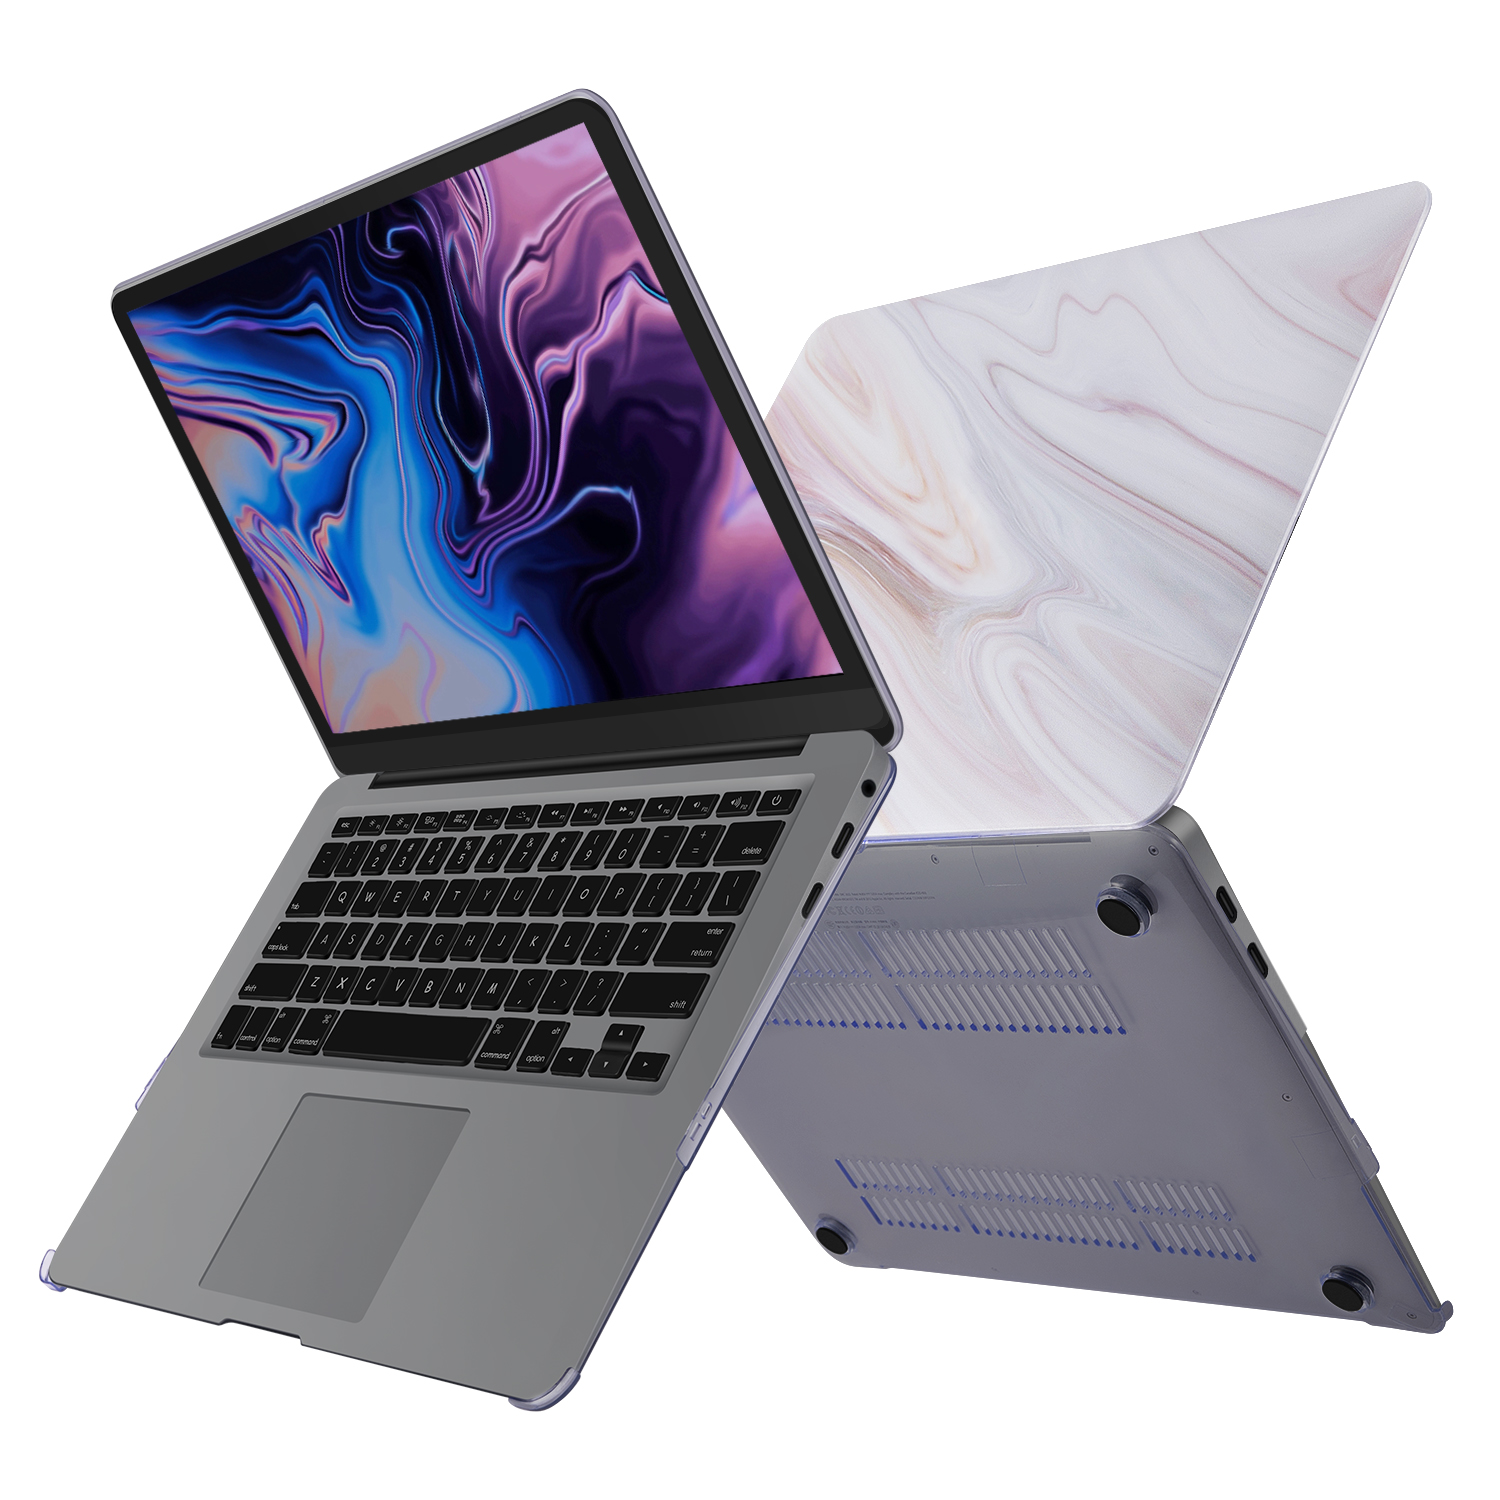 macbook pro 2016 weight 15 inch